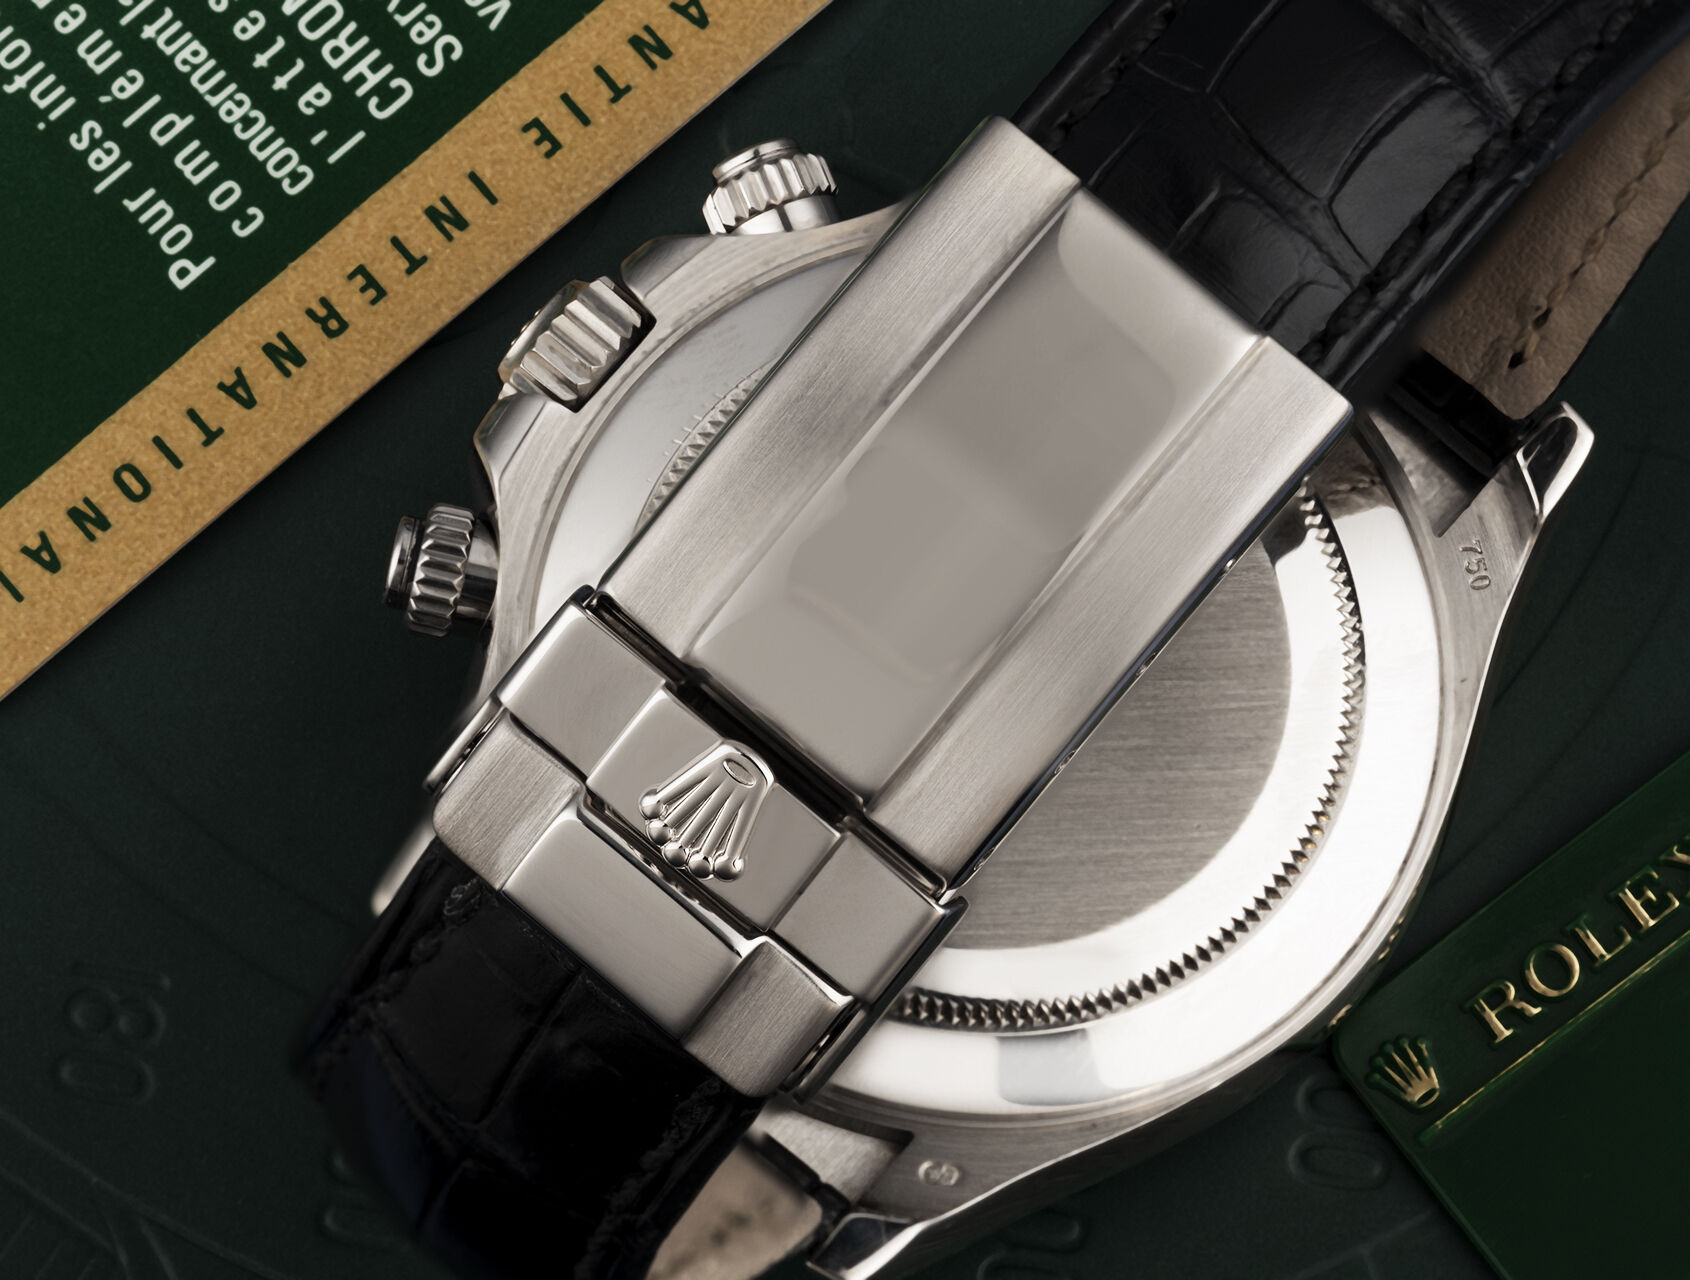 ref 116519 | 116519 - White Gold  | Rolex Cosmograph Daytona